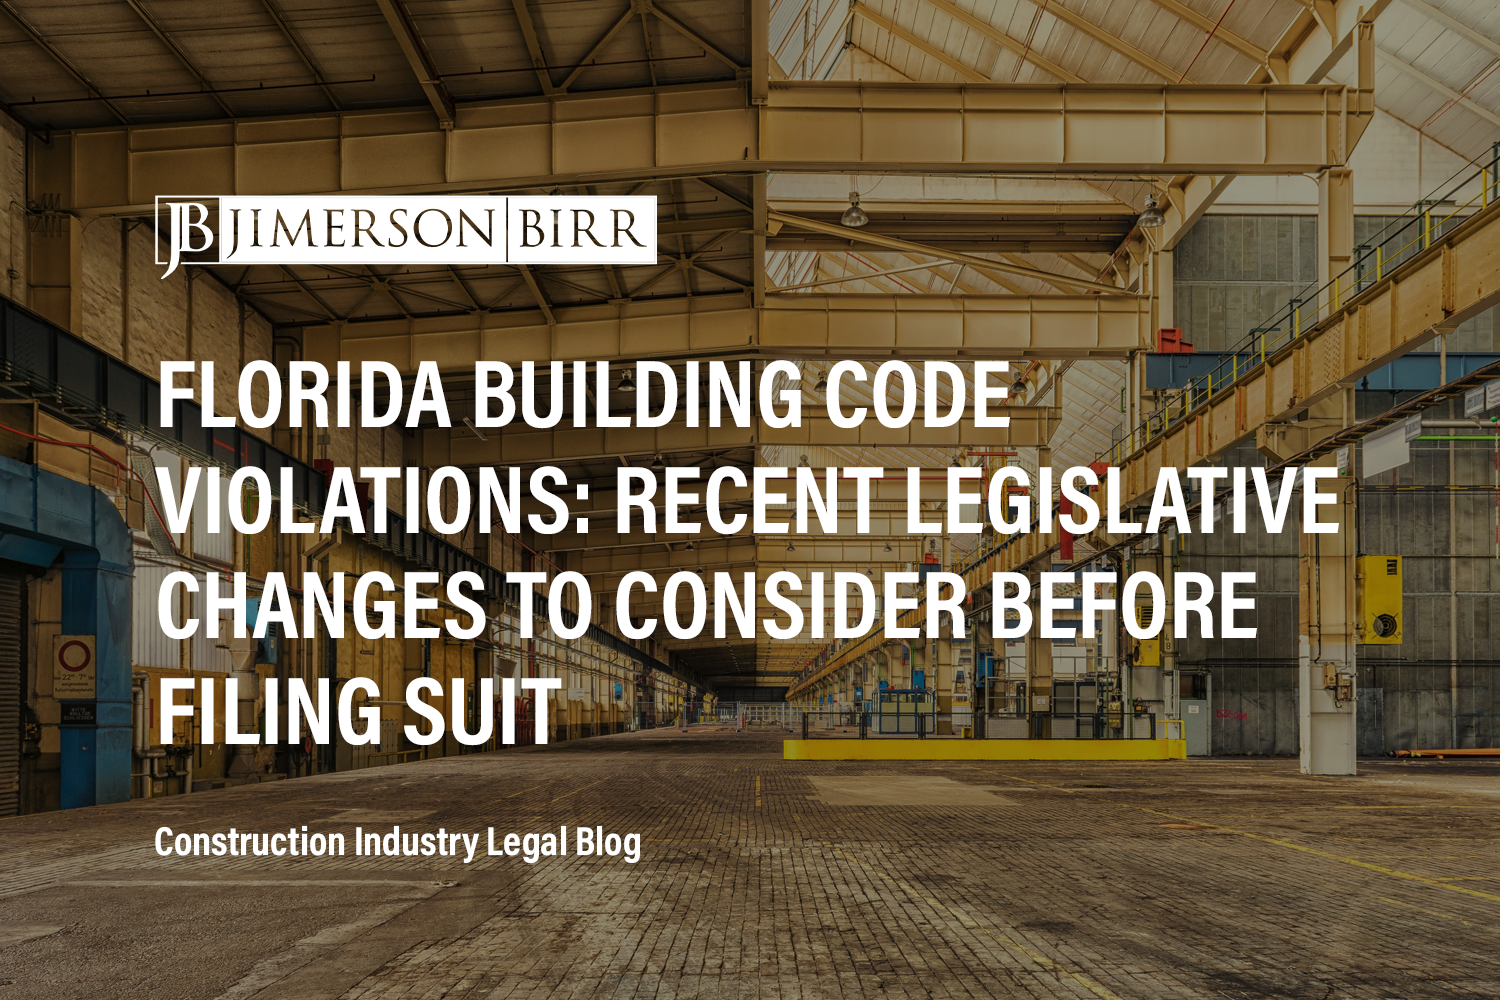 Florida Building Code Violations: Recent Legislative Changes to Consider Before Filing a Lawsuit